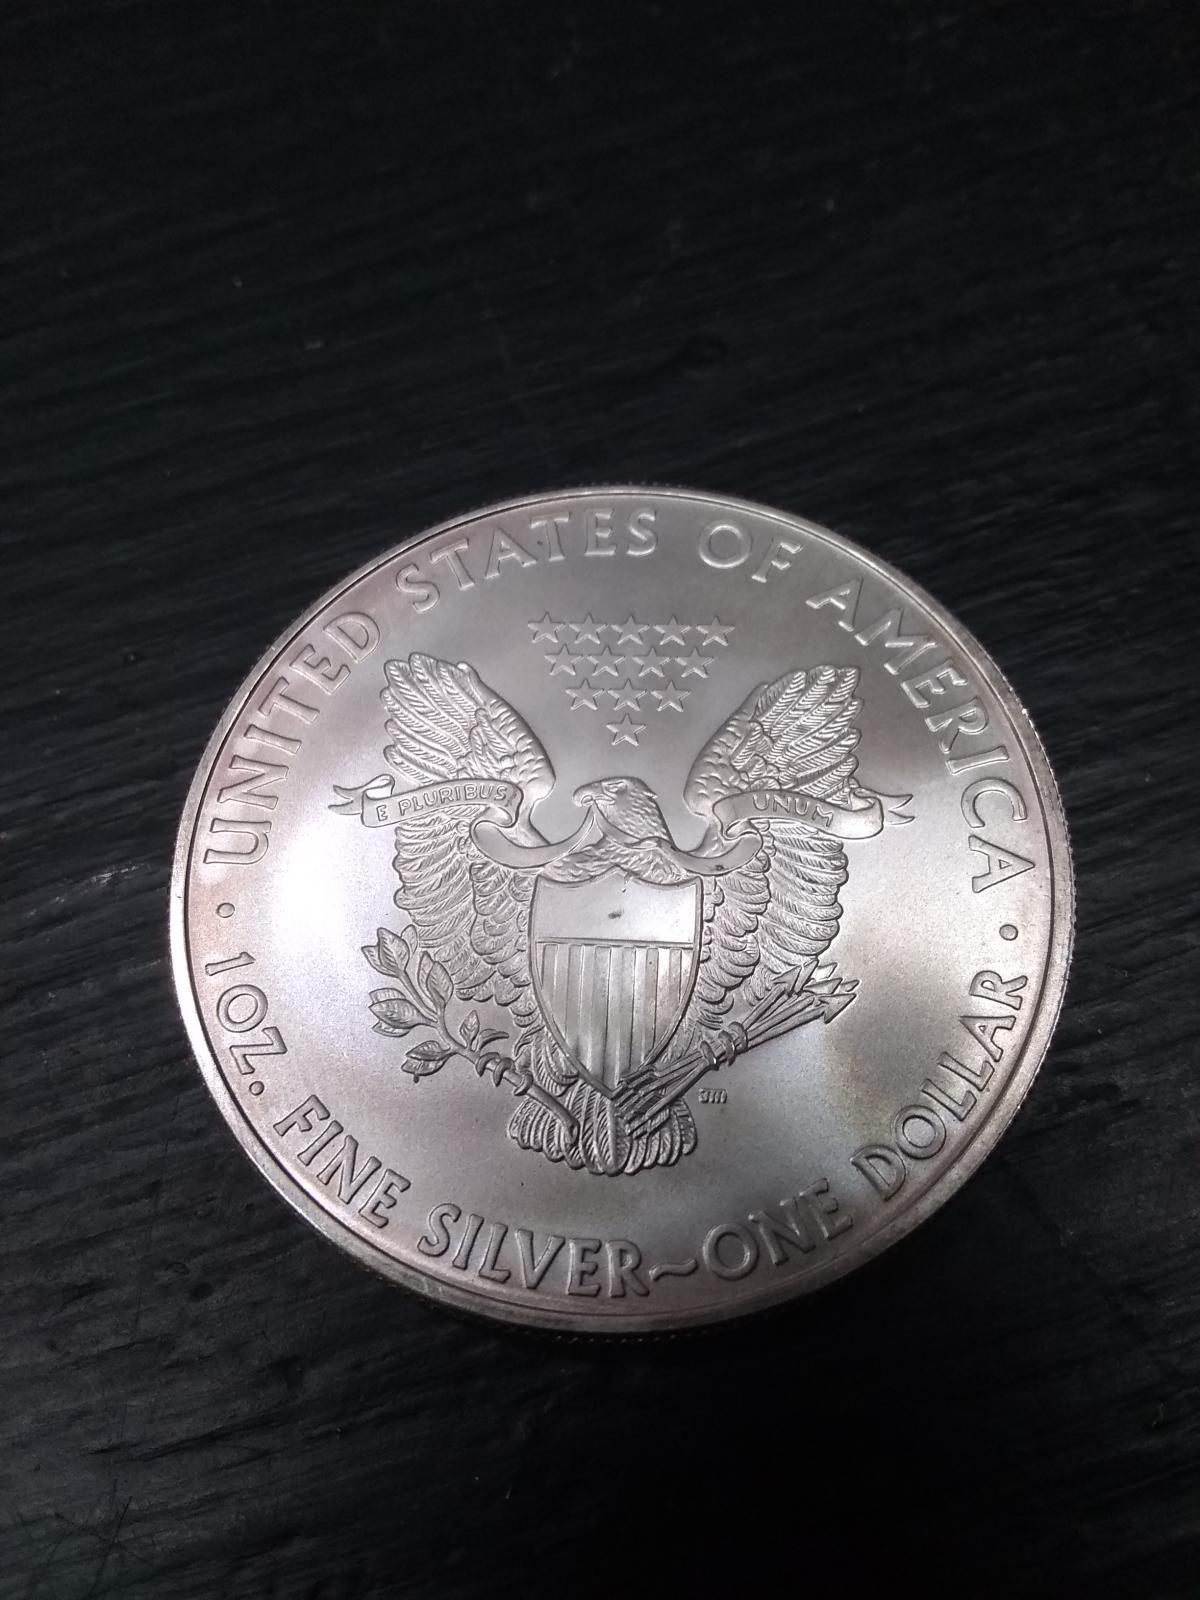 Coin-2009 Standing Liberty Silver Dollar